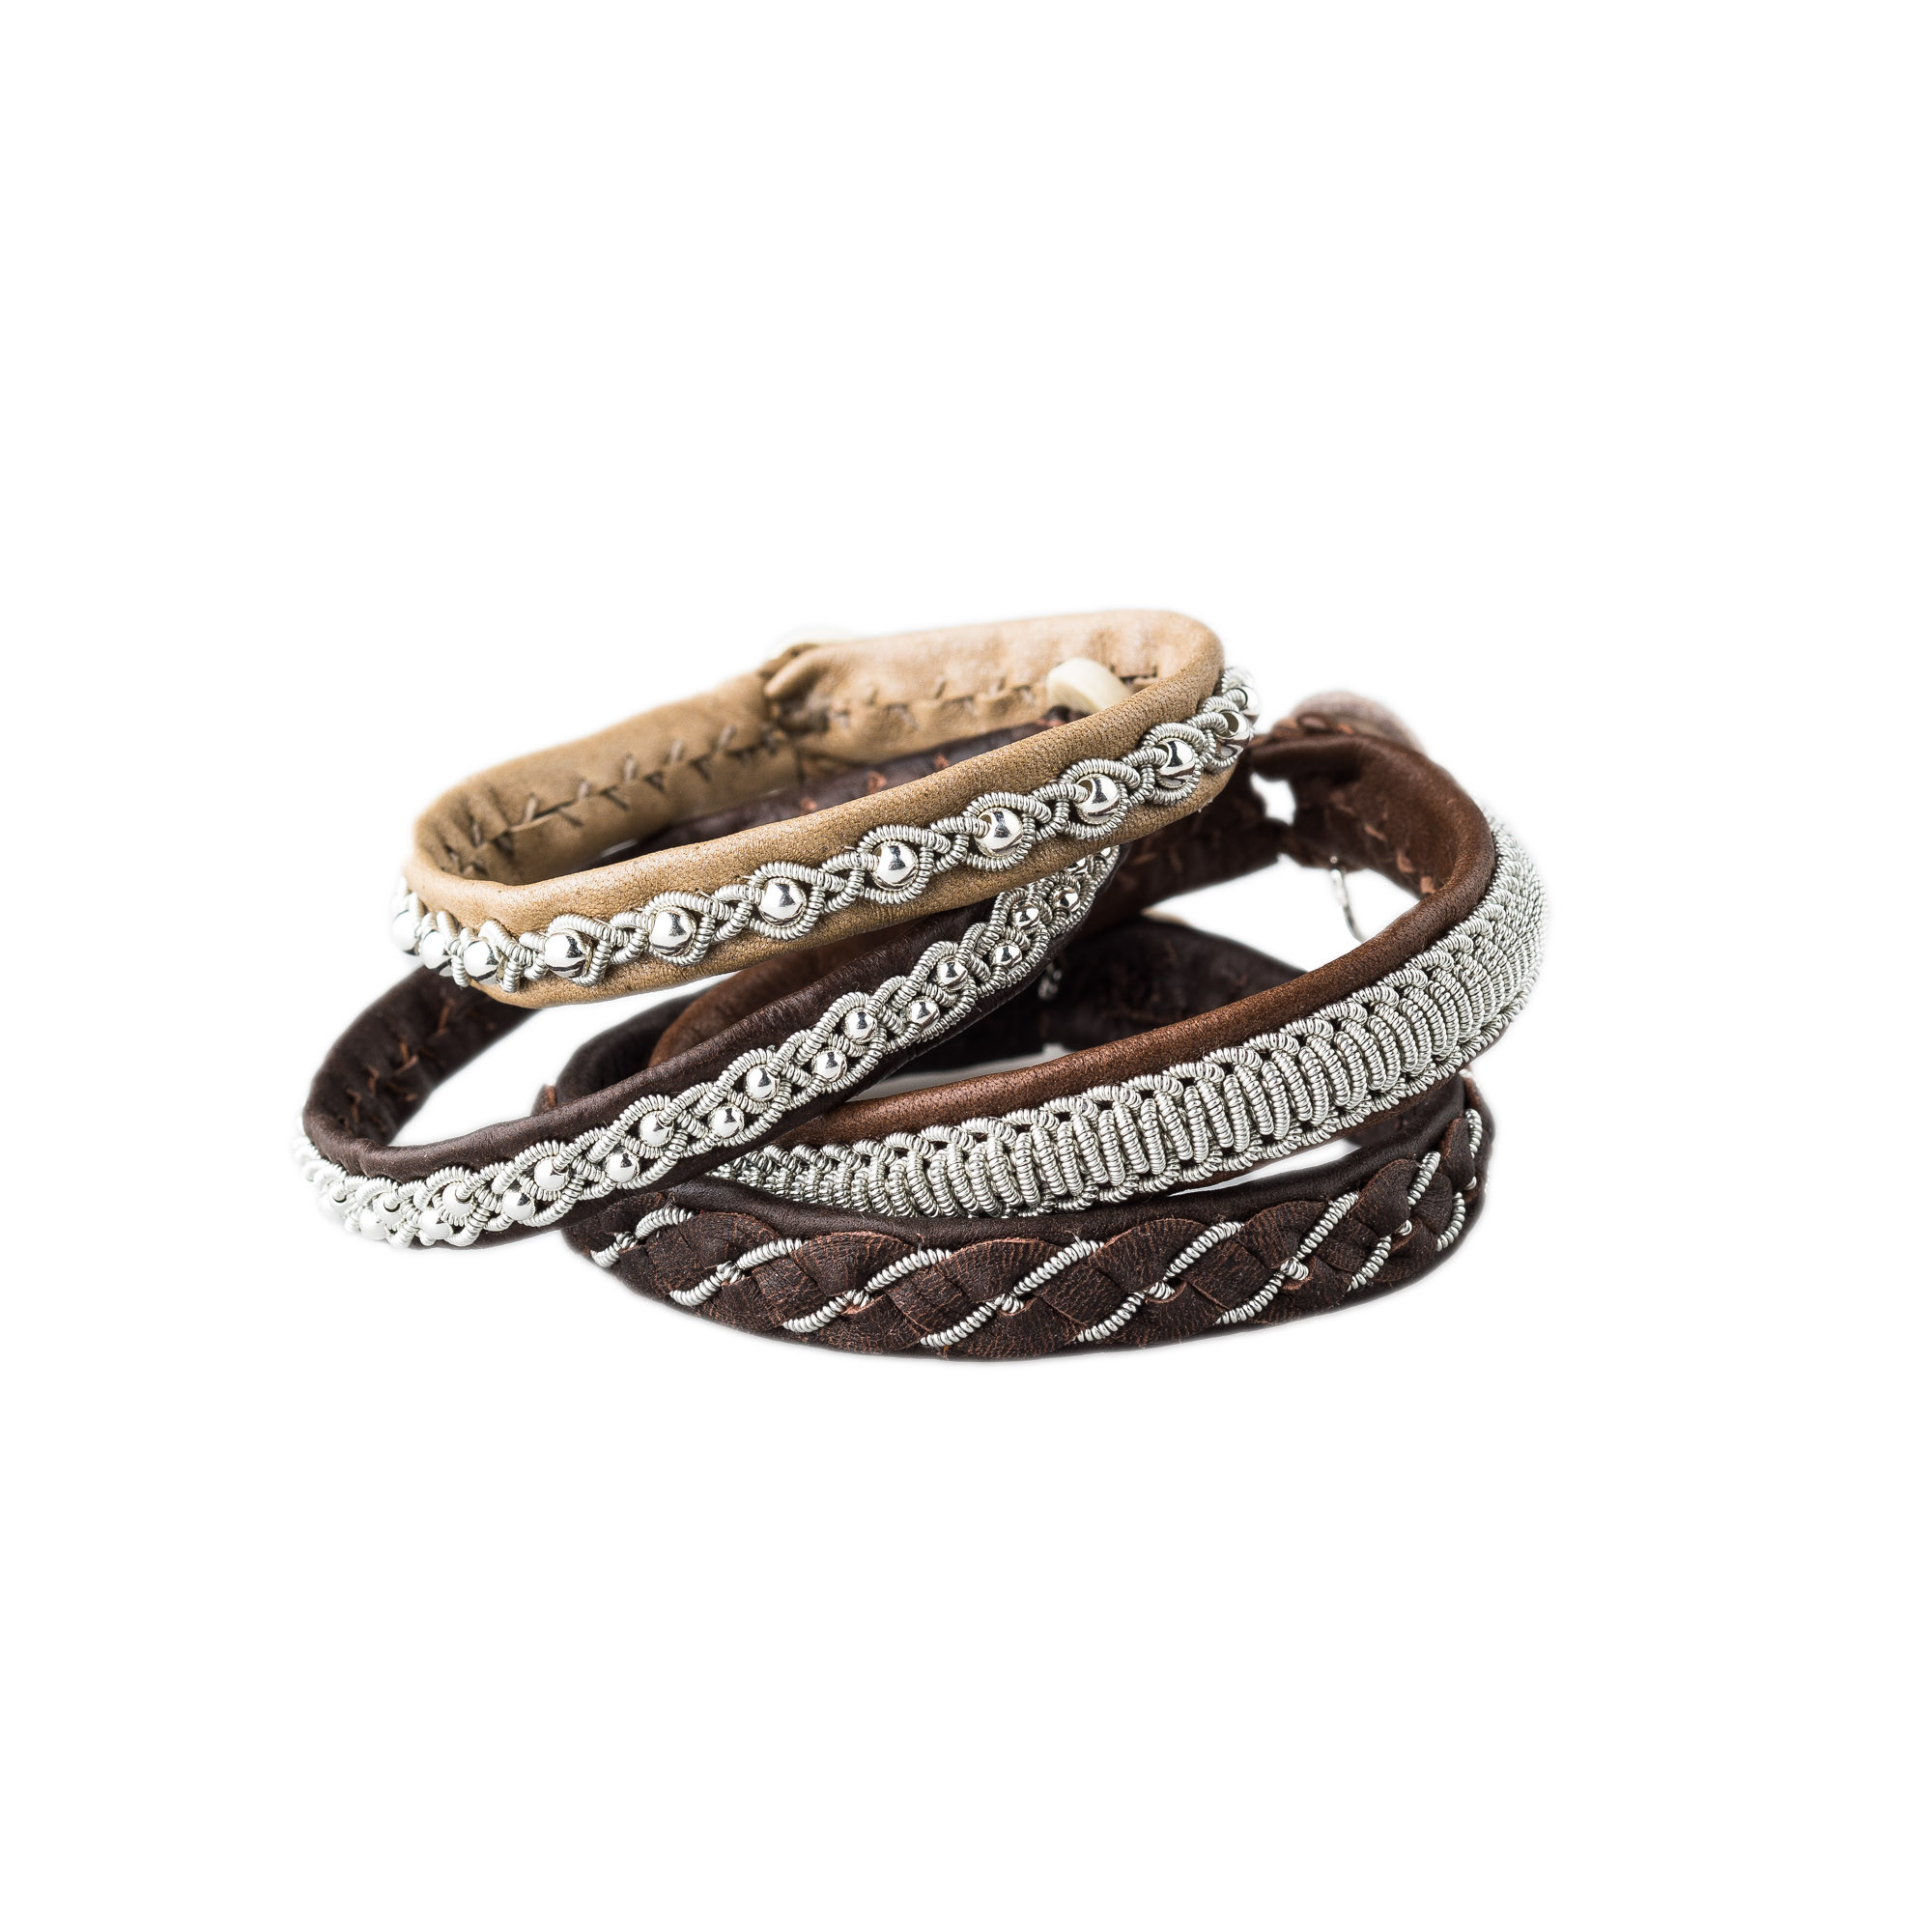 Maria Rudman - Pewter Embroidered Leather Bracelet | W.R. & Co Ltd